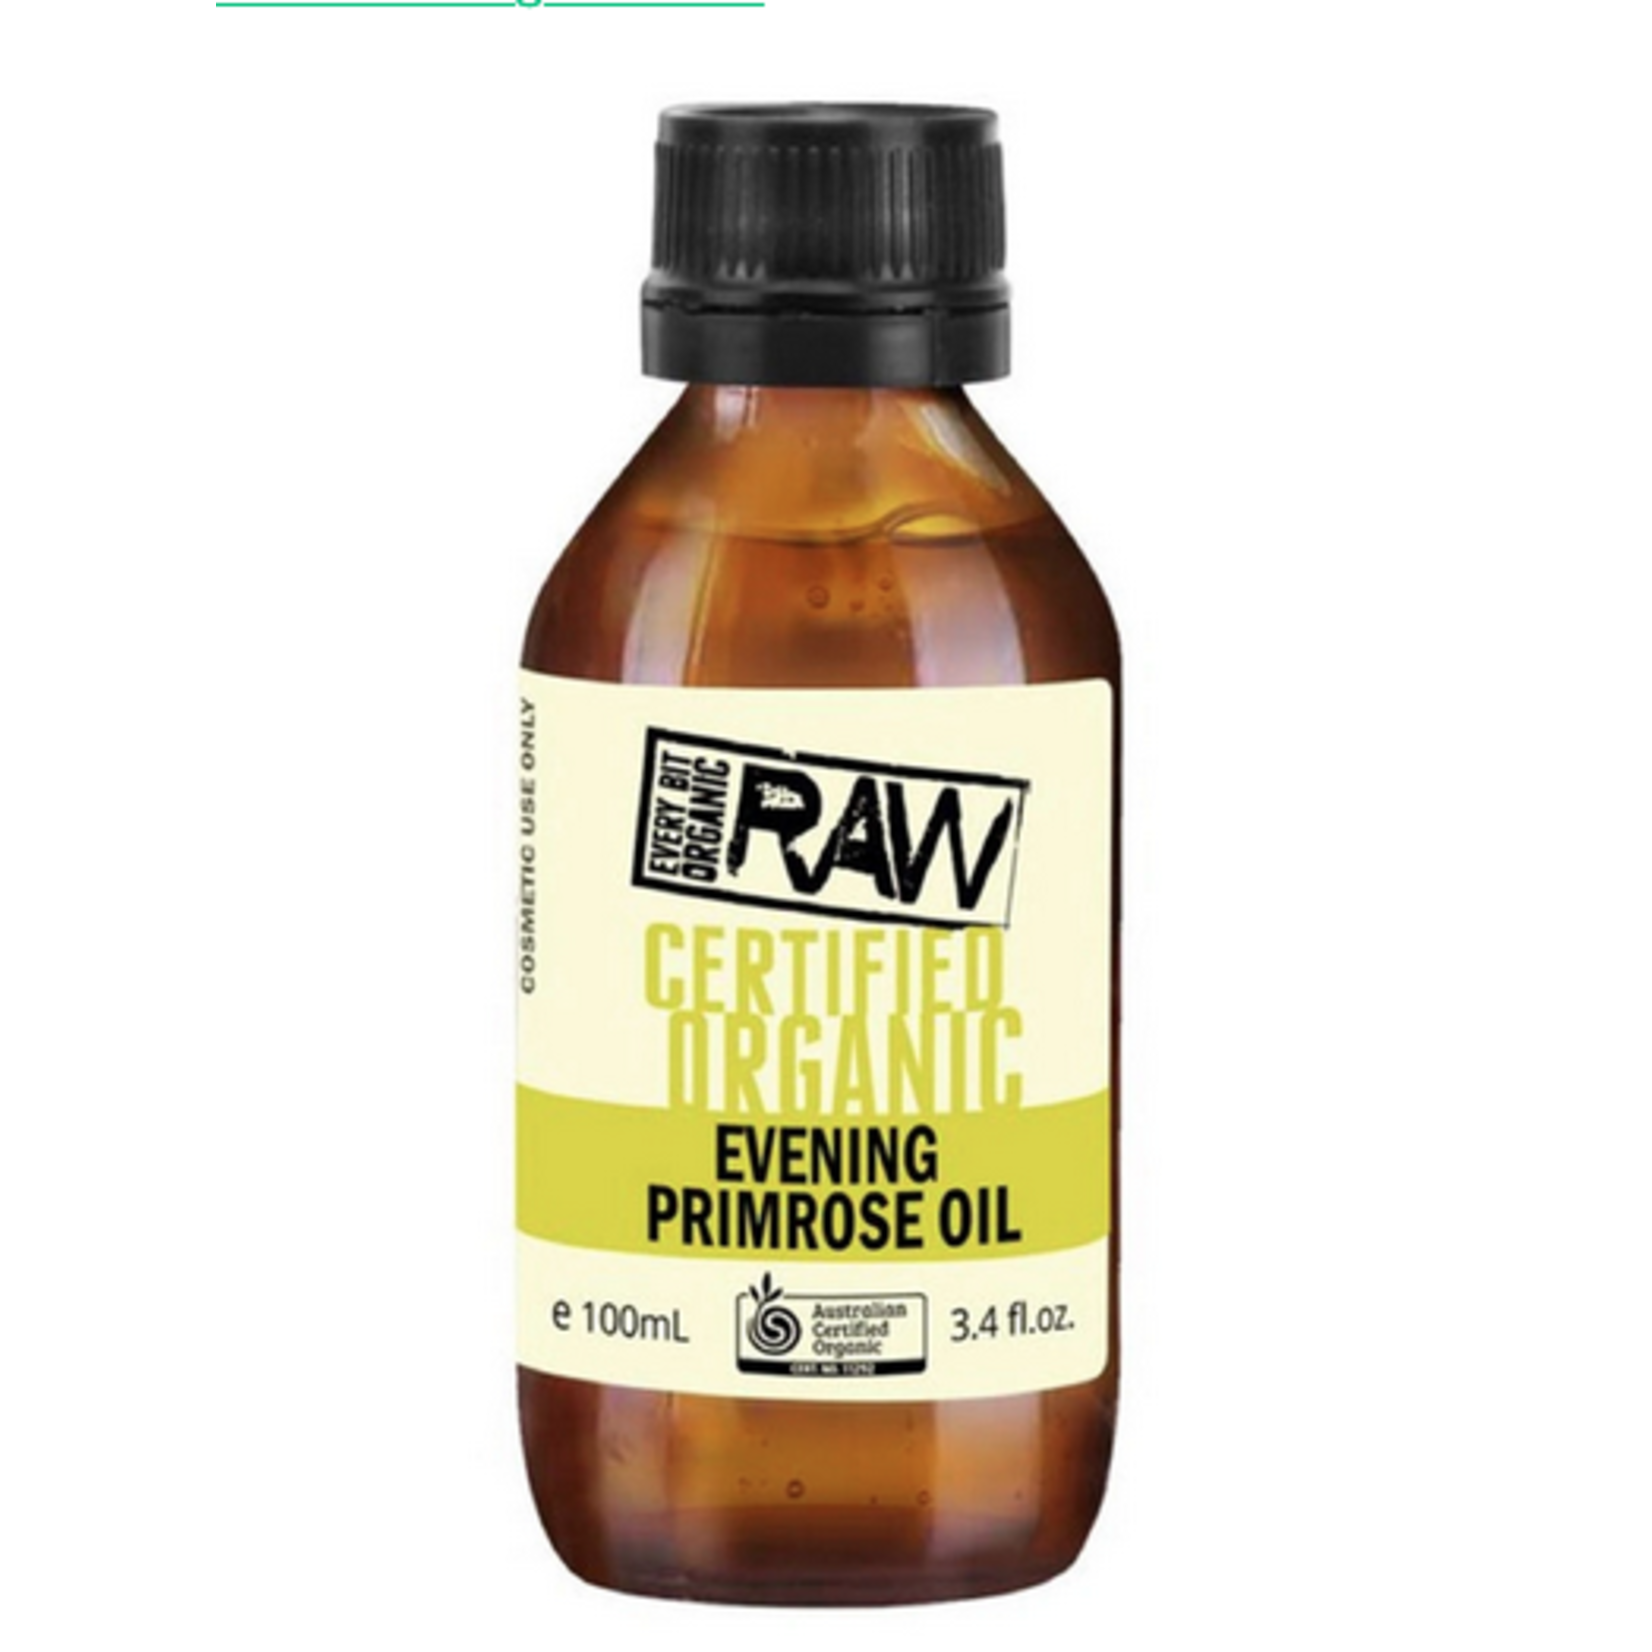 EVERY BIT ORGANIC RAW Evening Primrose Oil